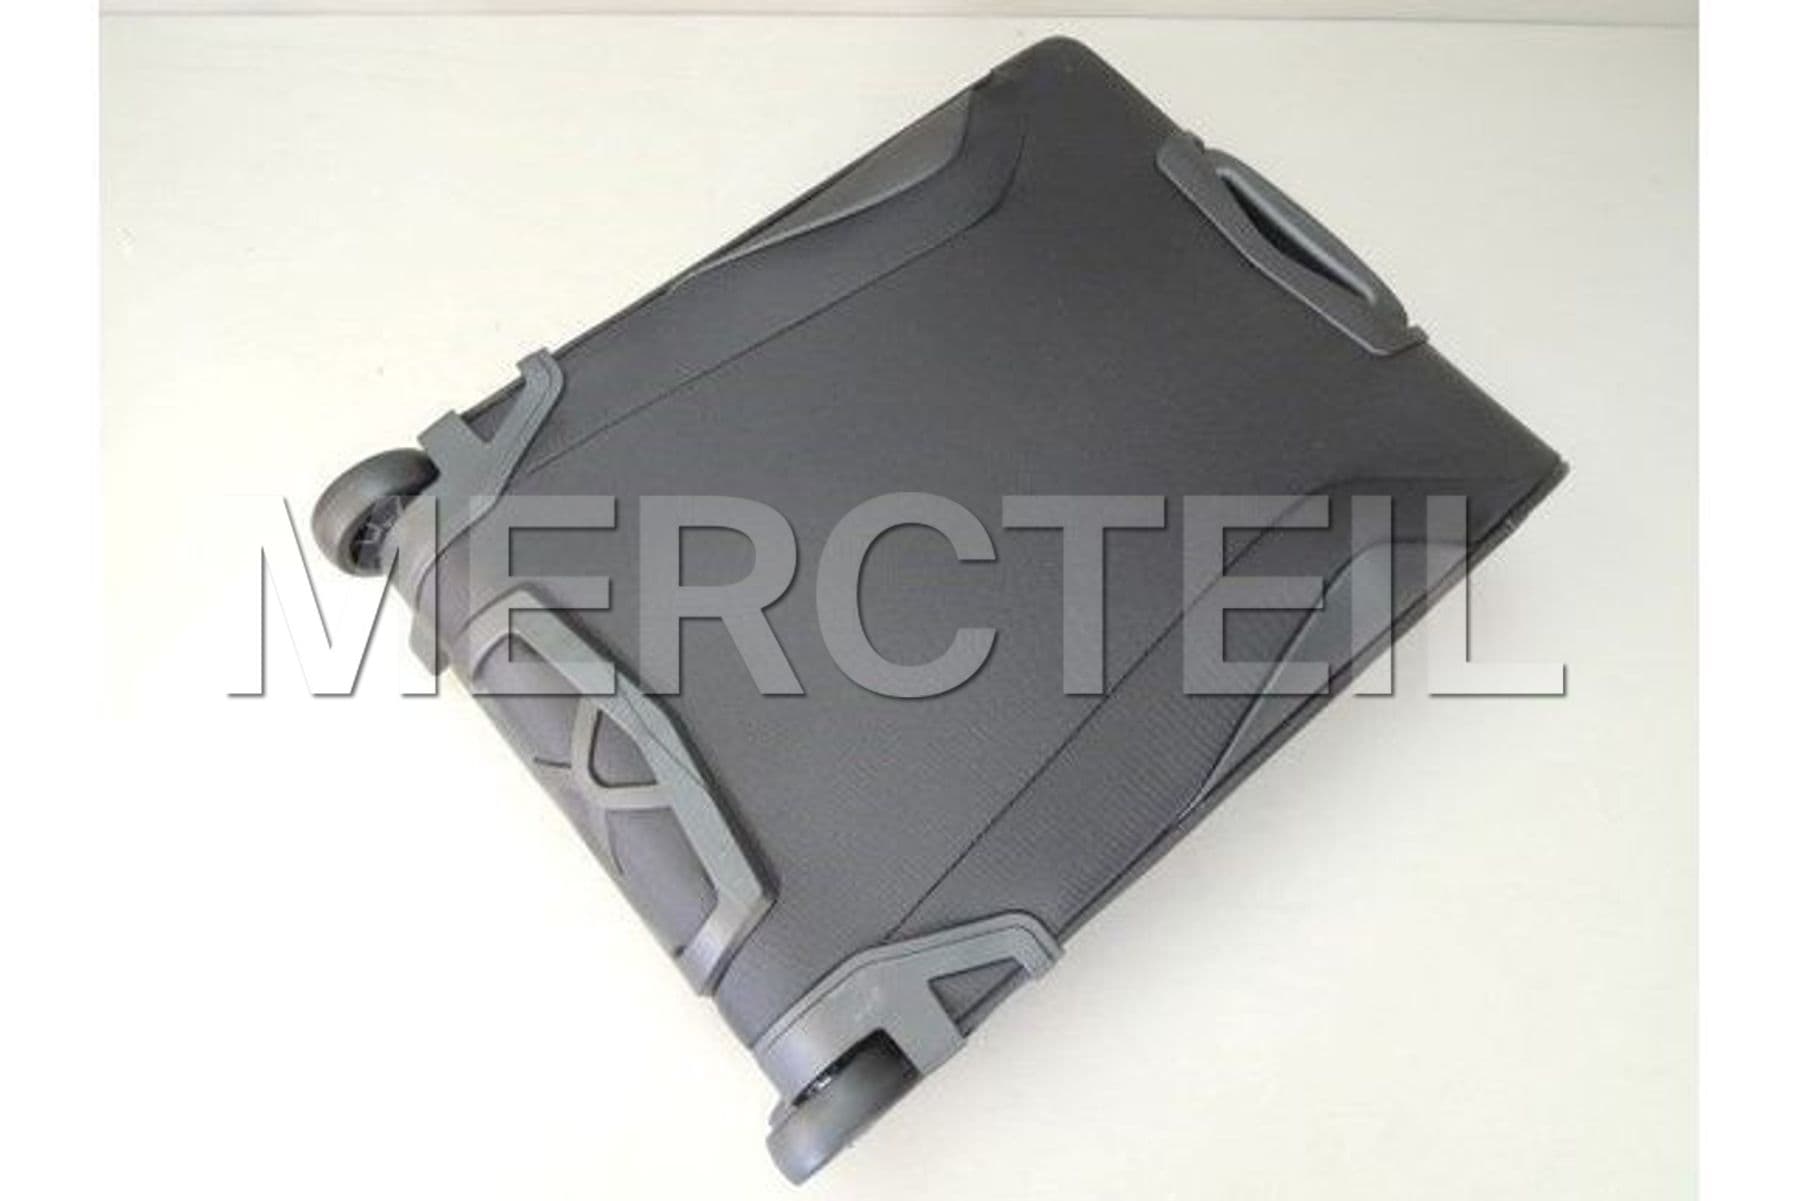 Buy the spare part Mercedes-Benz B66956785 rucksack